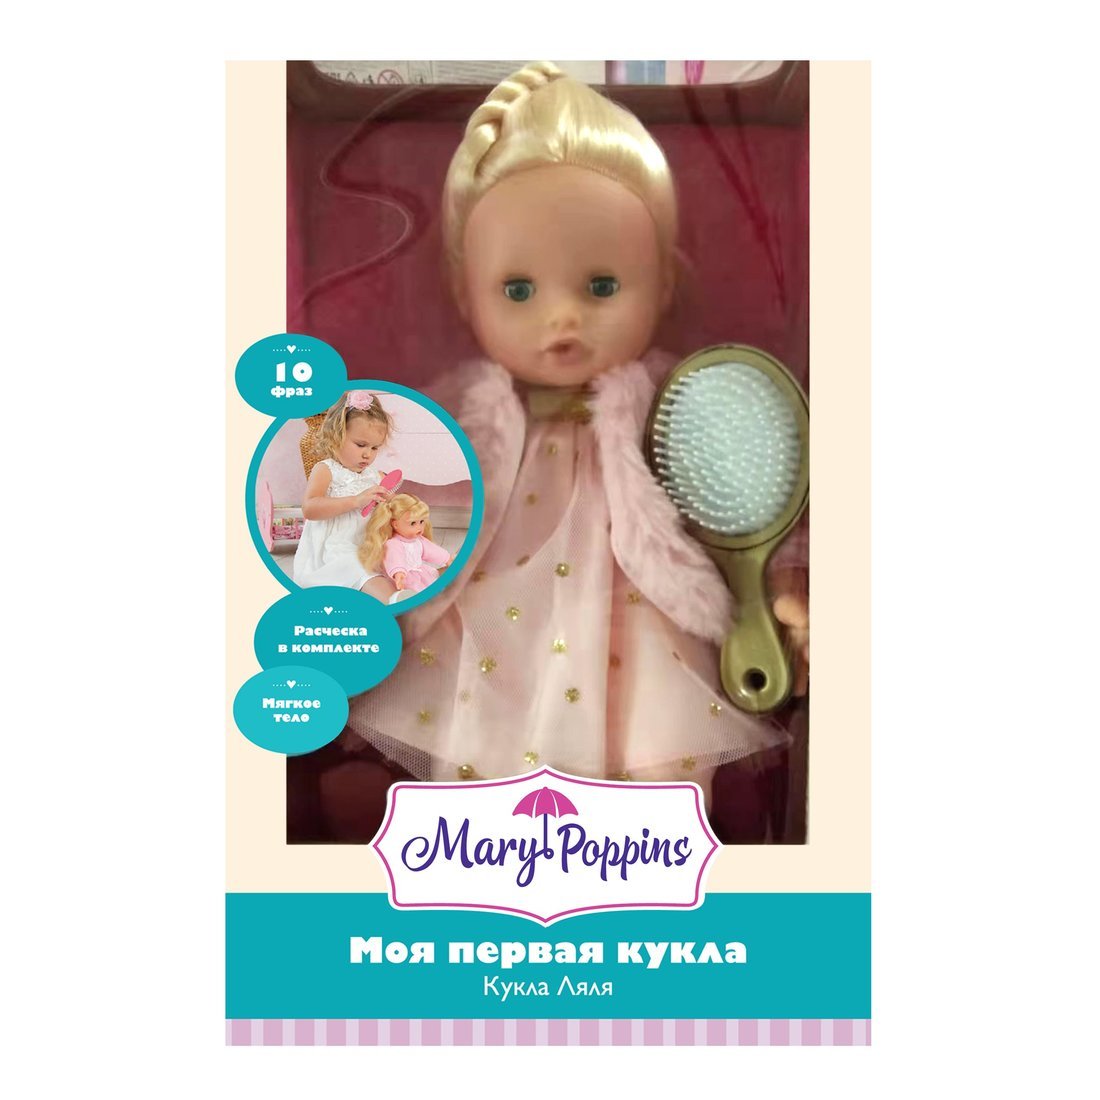 Кукла Ляля "Моя первая кукла" м/н  30см, коллекция New Mary.